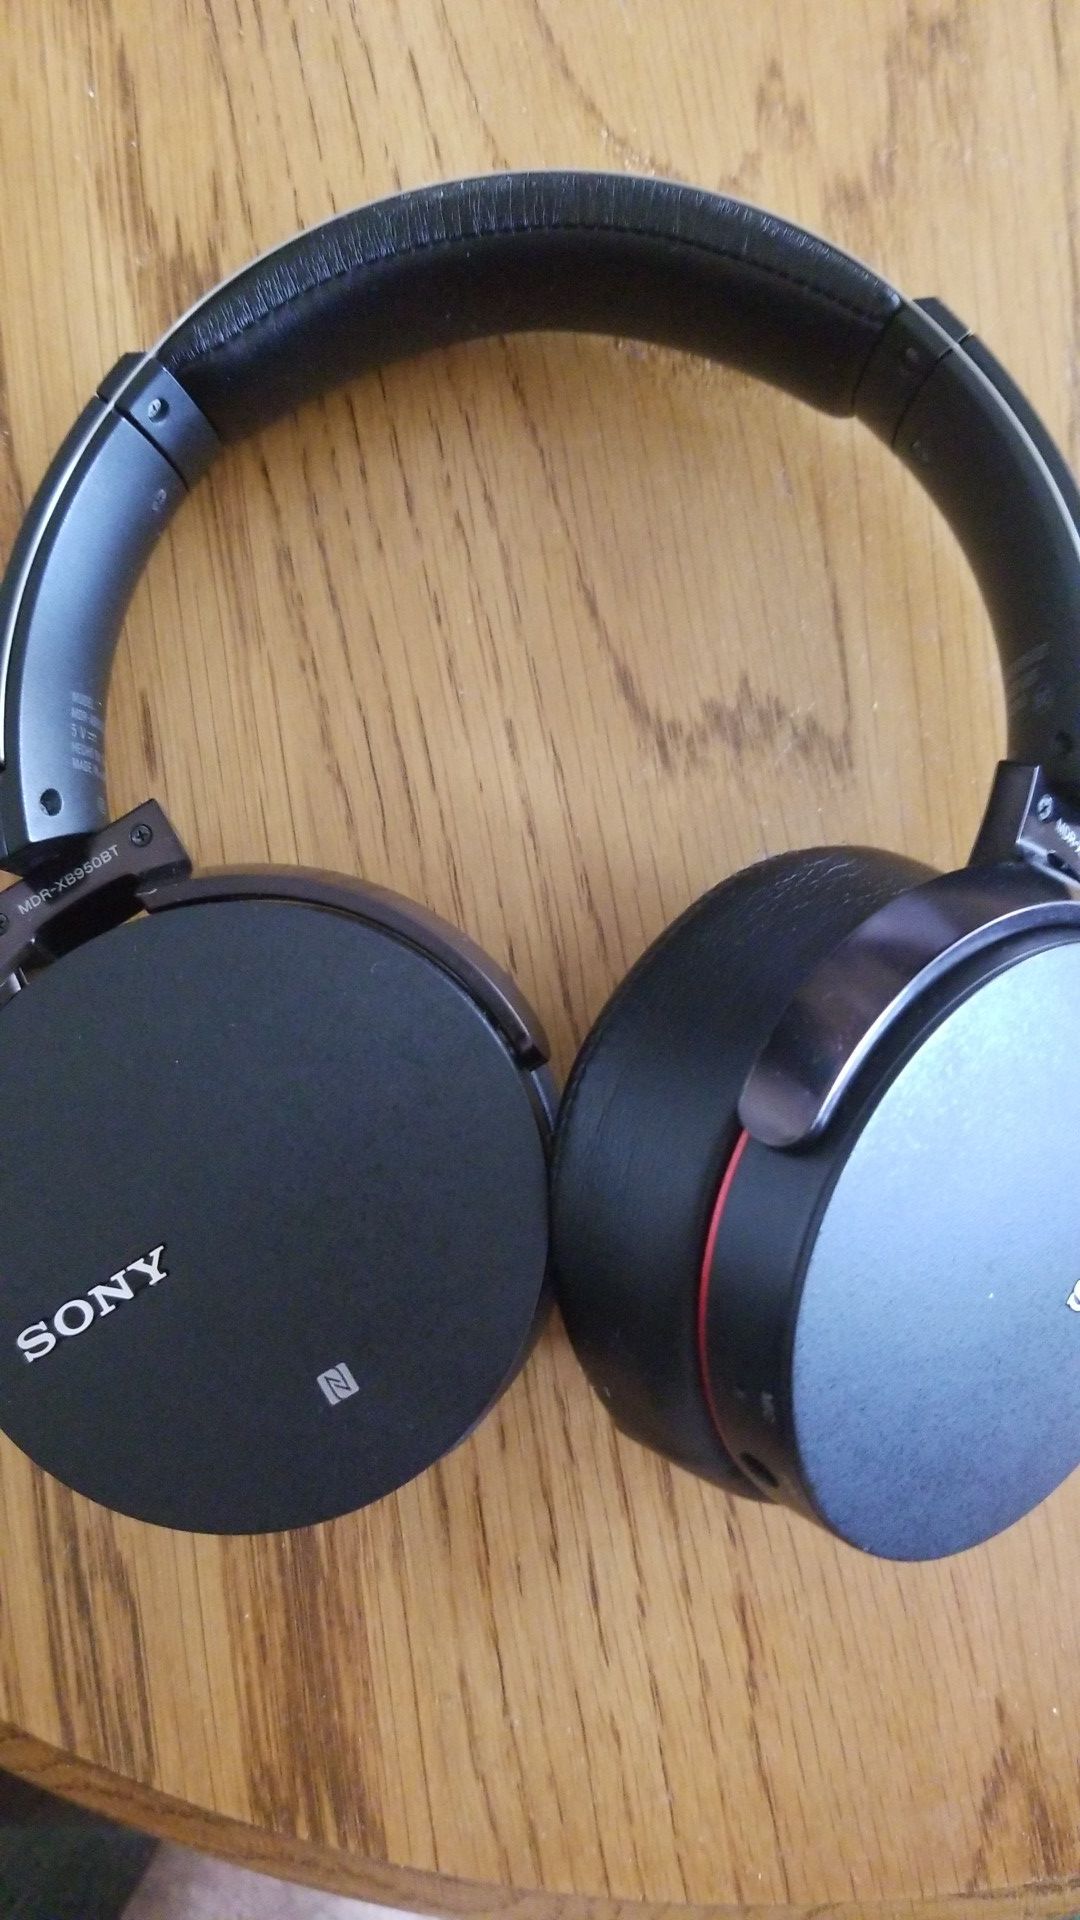 Sony MDR-XB950BT over ear headphones